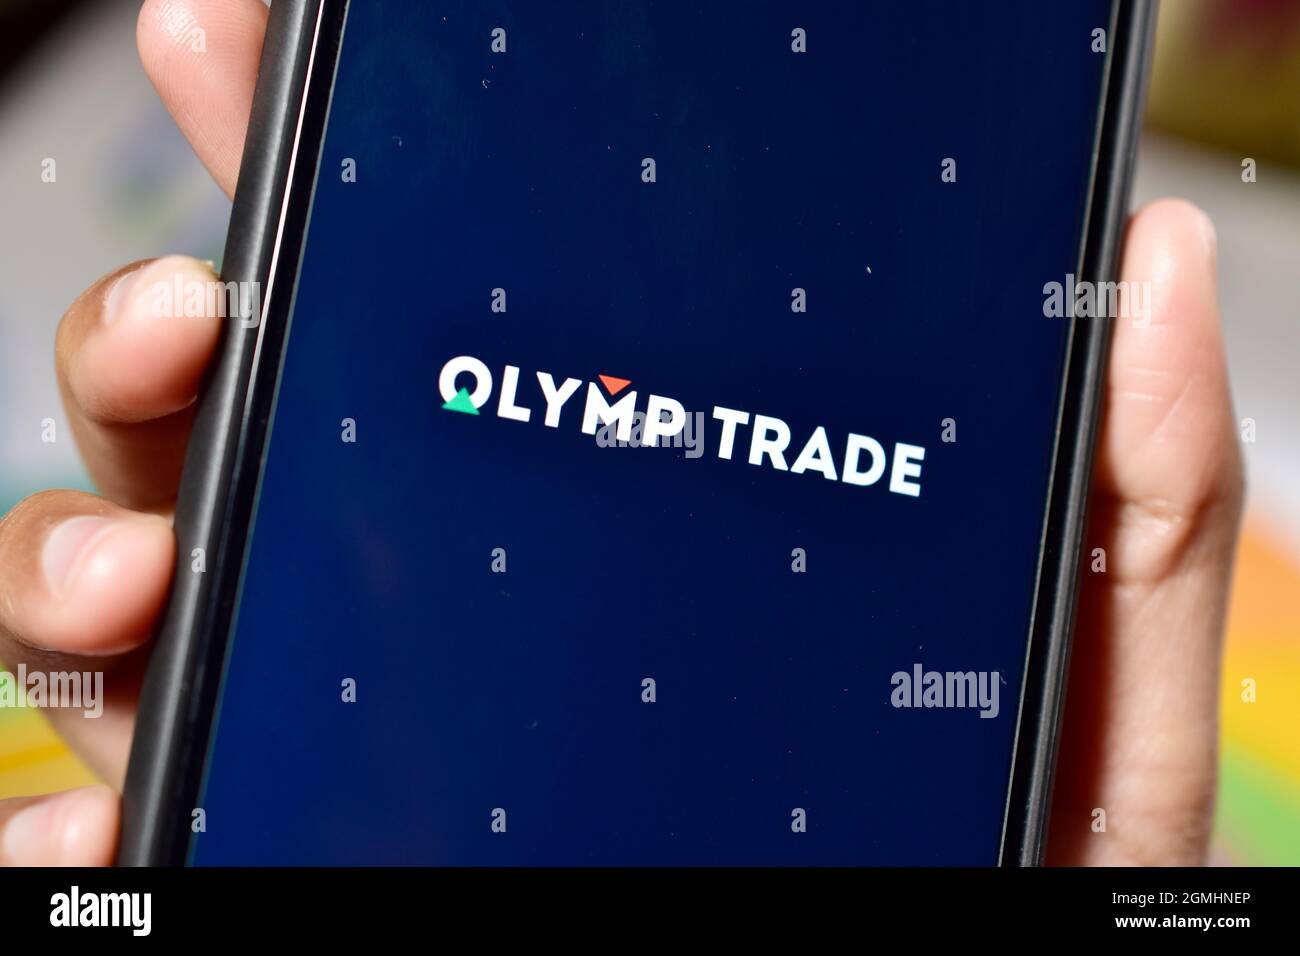 New Delhi, India, 12 January 2020:- Olymp trade application on smartphone Stock Photo